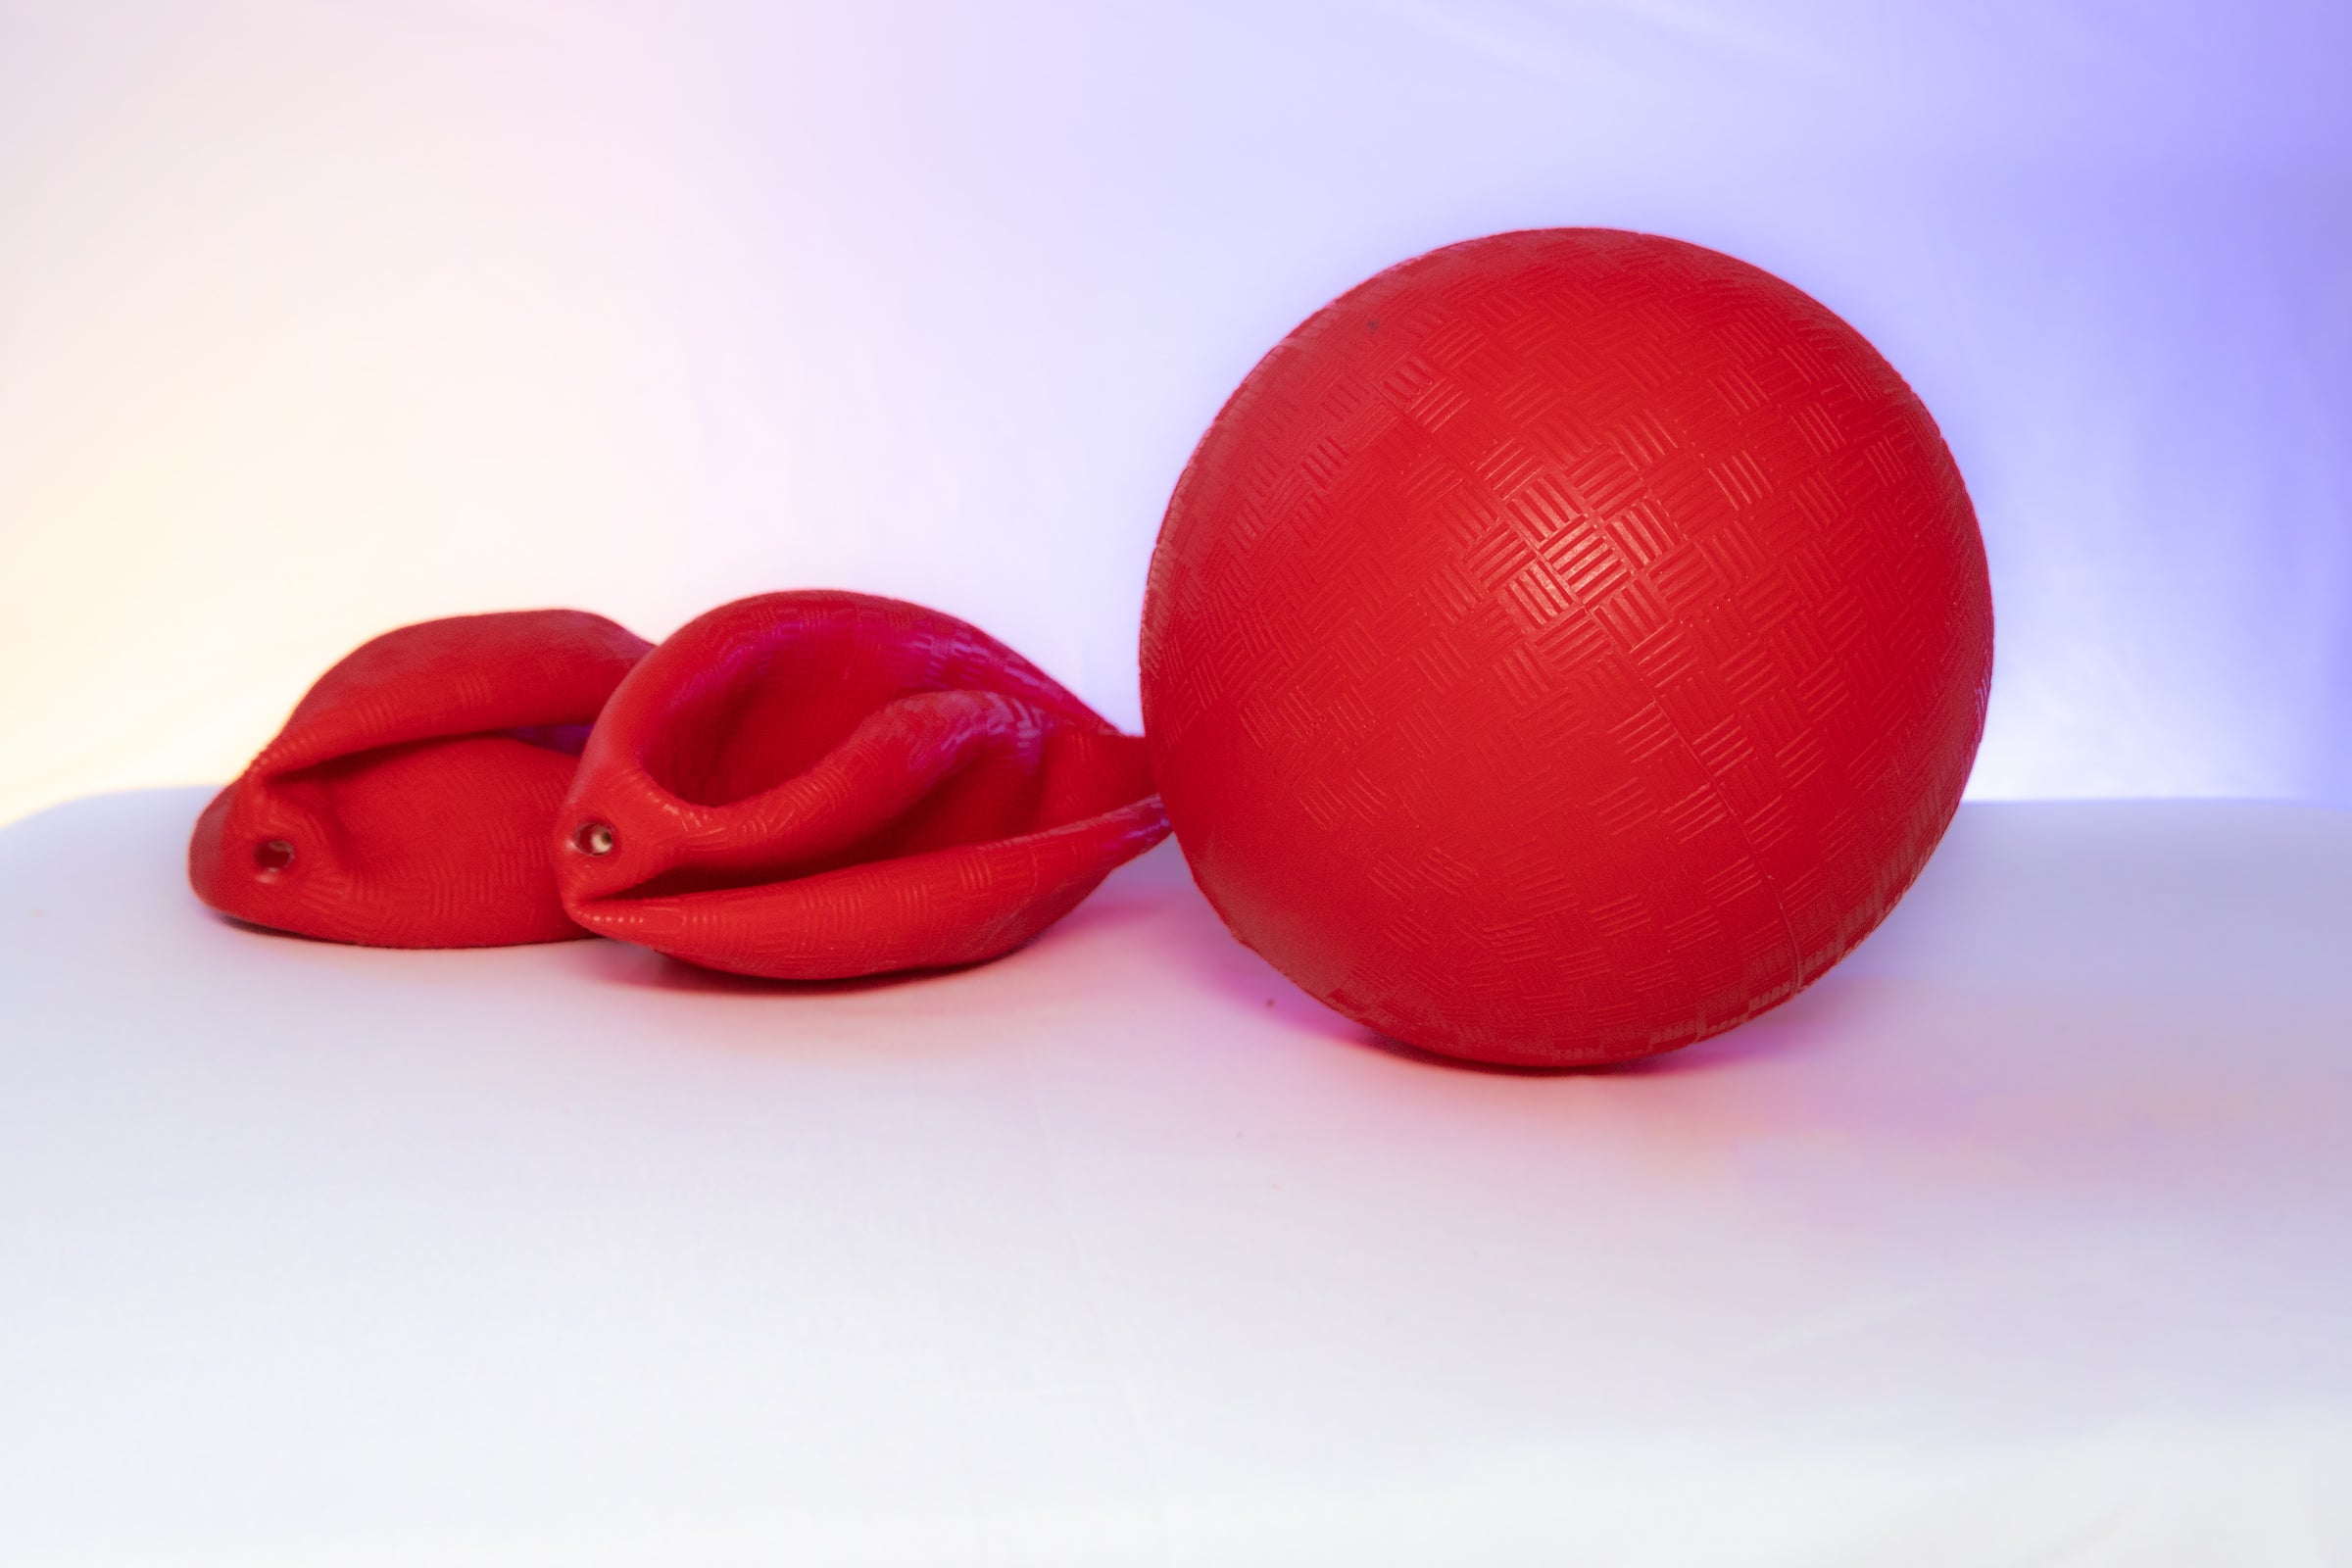 Red five-inch playground balls.